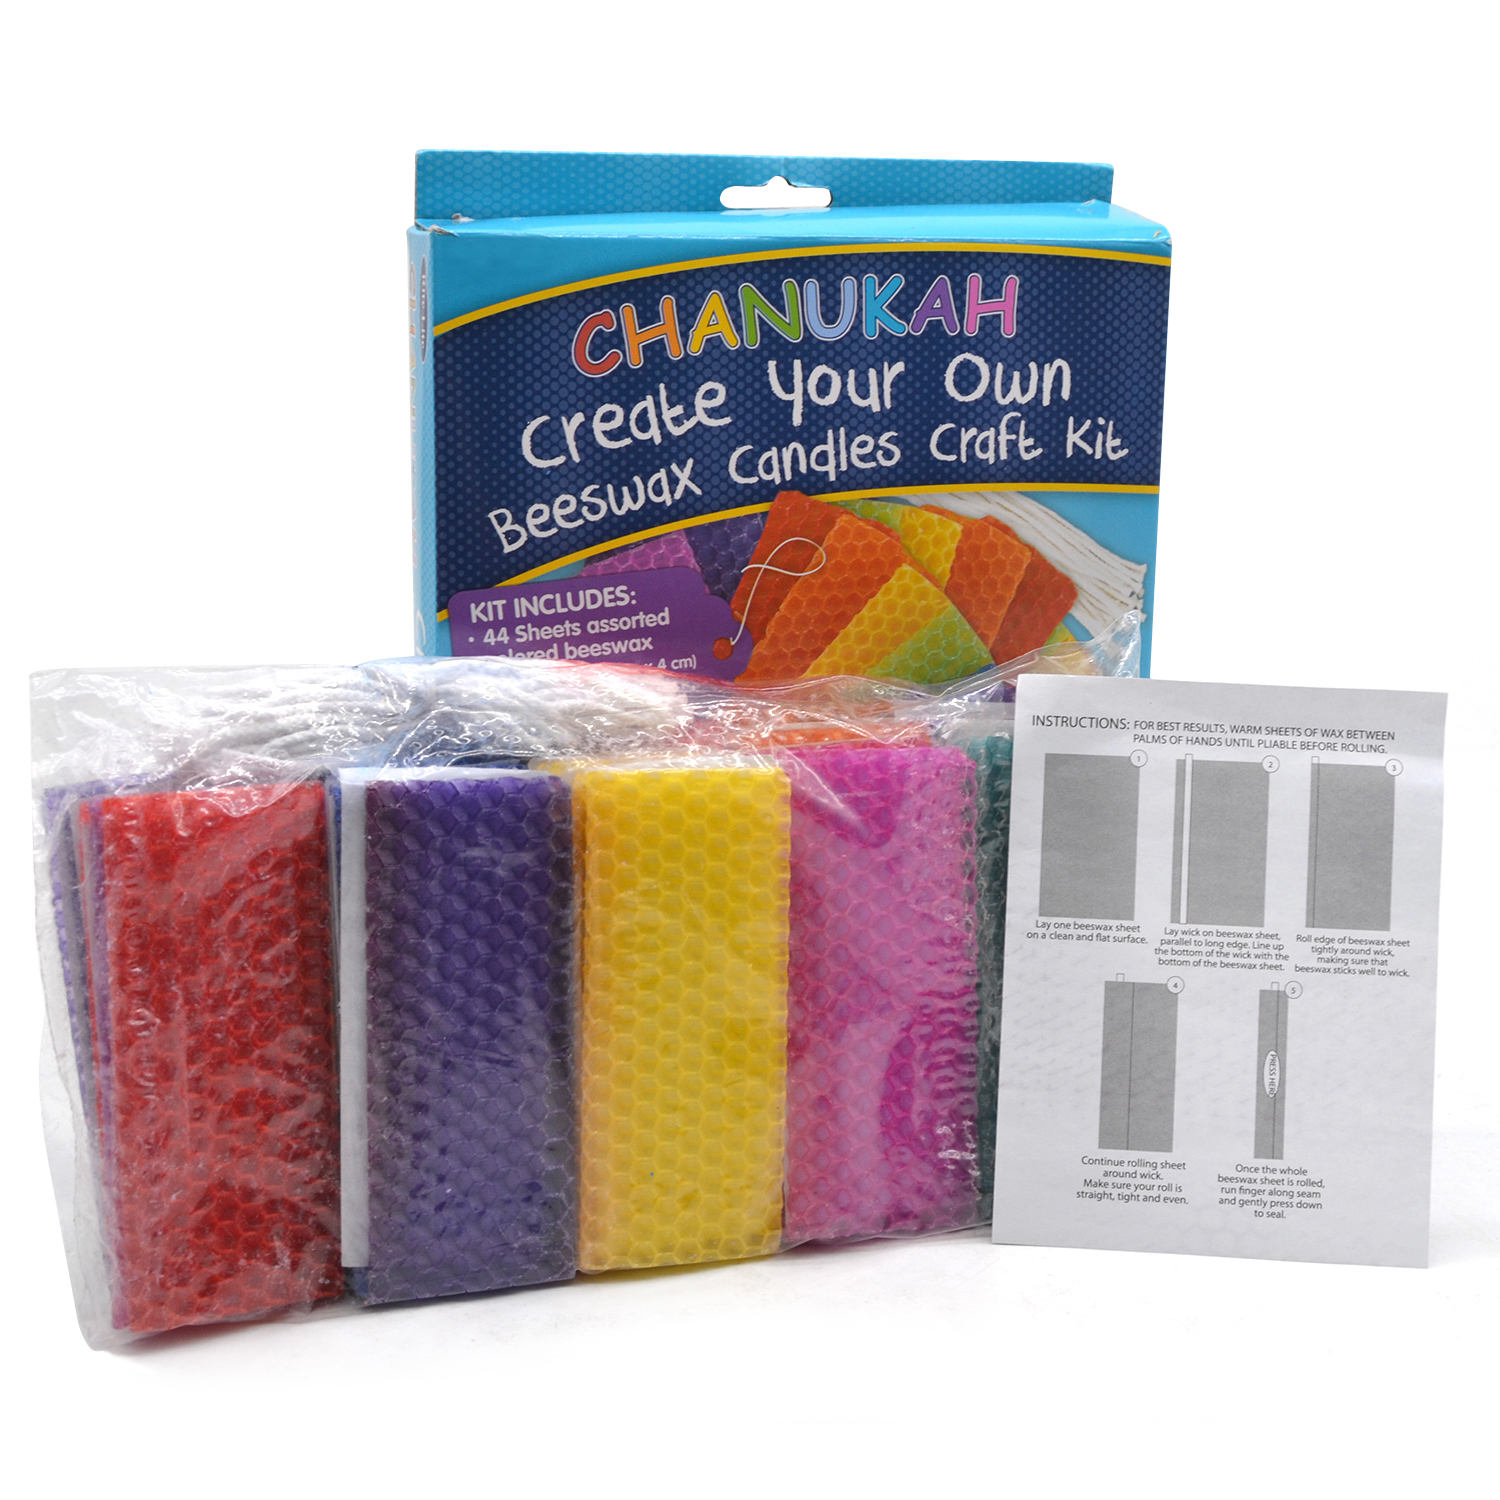 DIY Handle Rolled Beeswax Hanukkah Candle Making Kit For Kids Children –  Hanukkah Candle